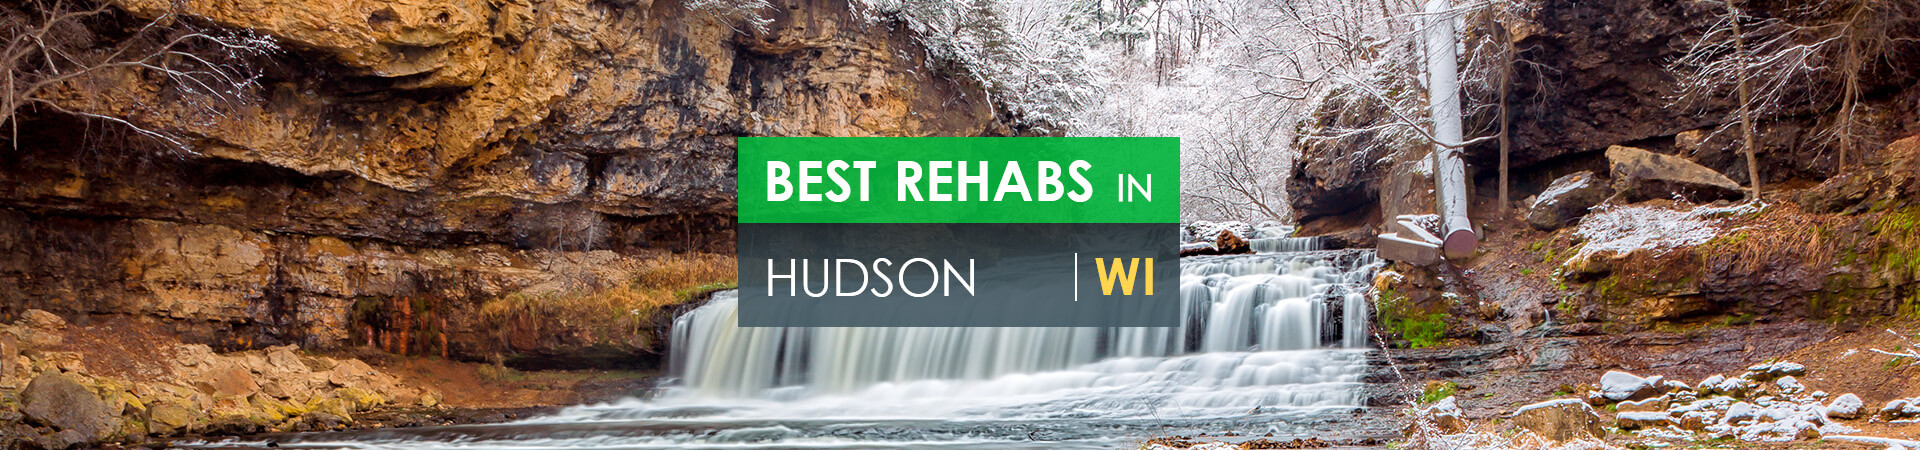 Best rehabs in Hudson, WI